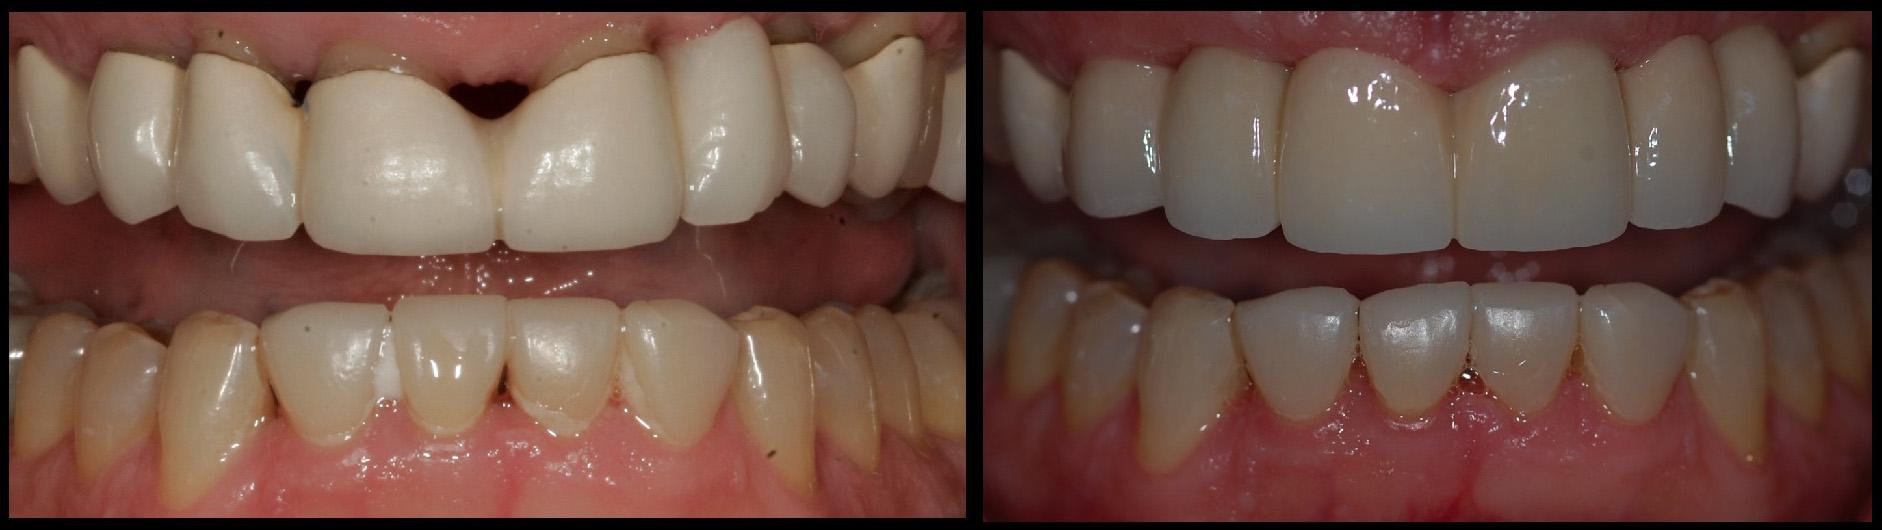 dental implant treatment by Mae Lee Springer, DDS